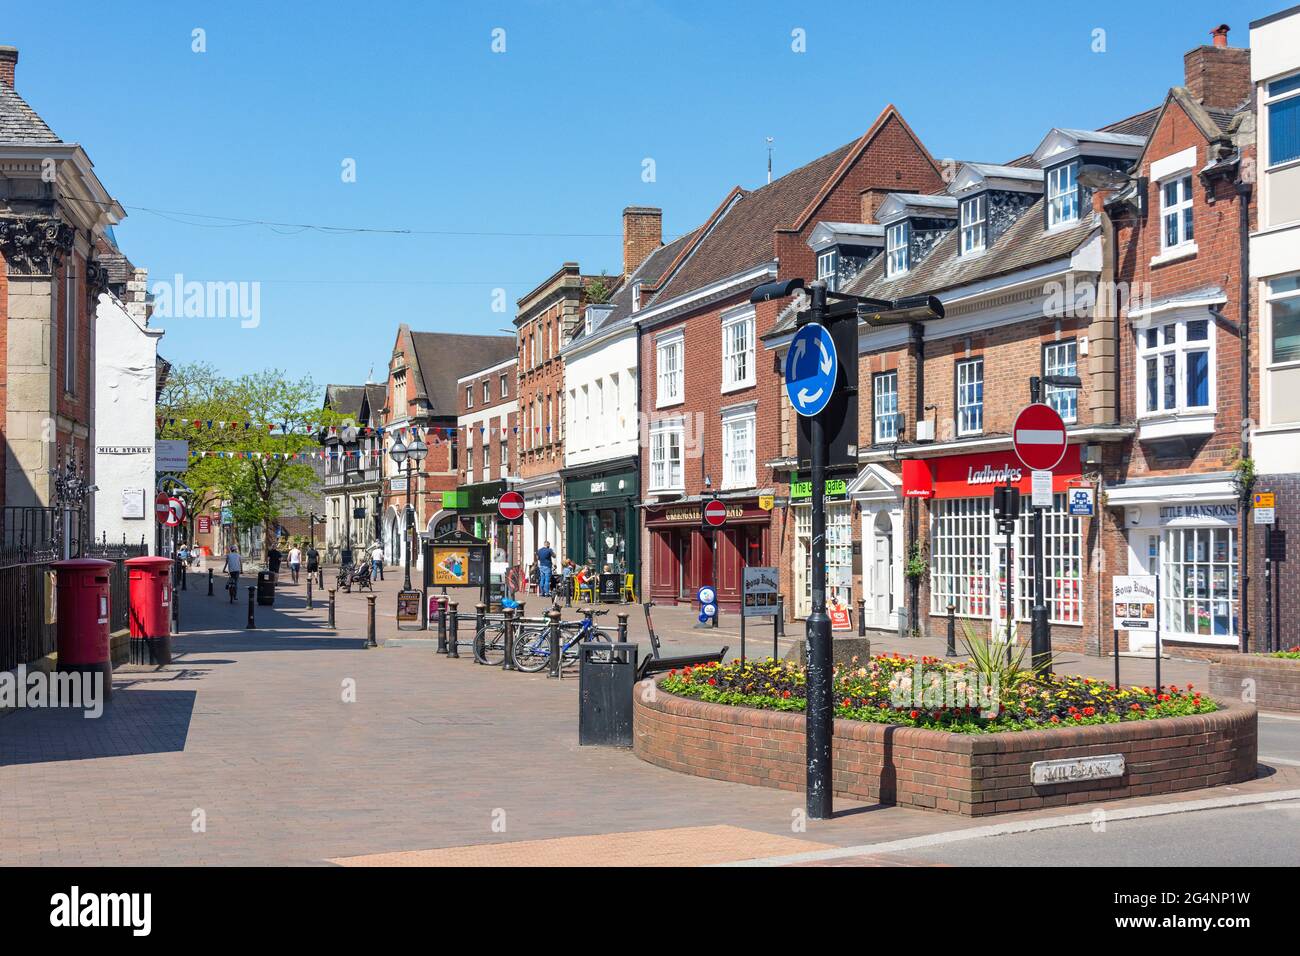 Pedestrianised Greengate Street, Stafford, Staffordshire, England, United Kingdom Stock Photo